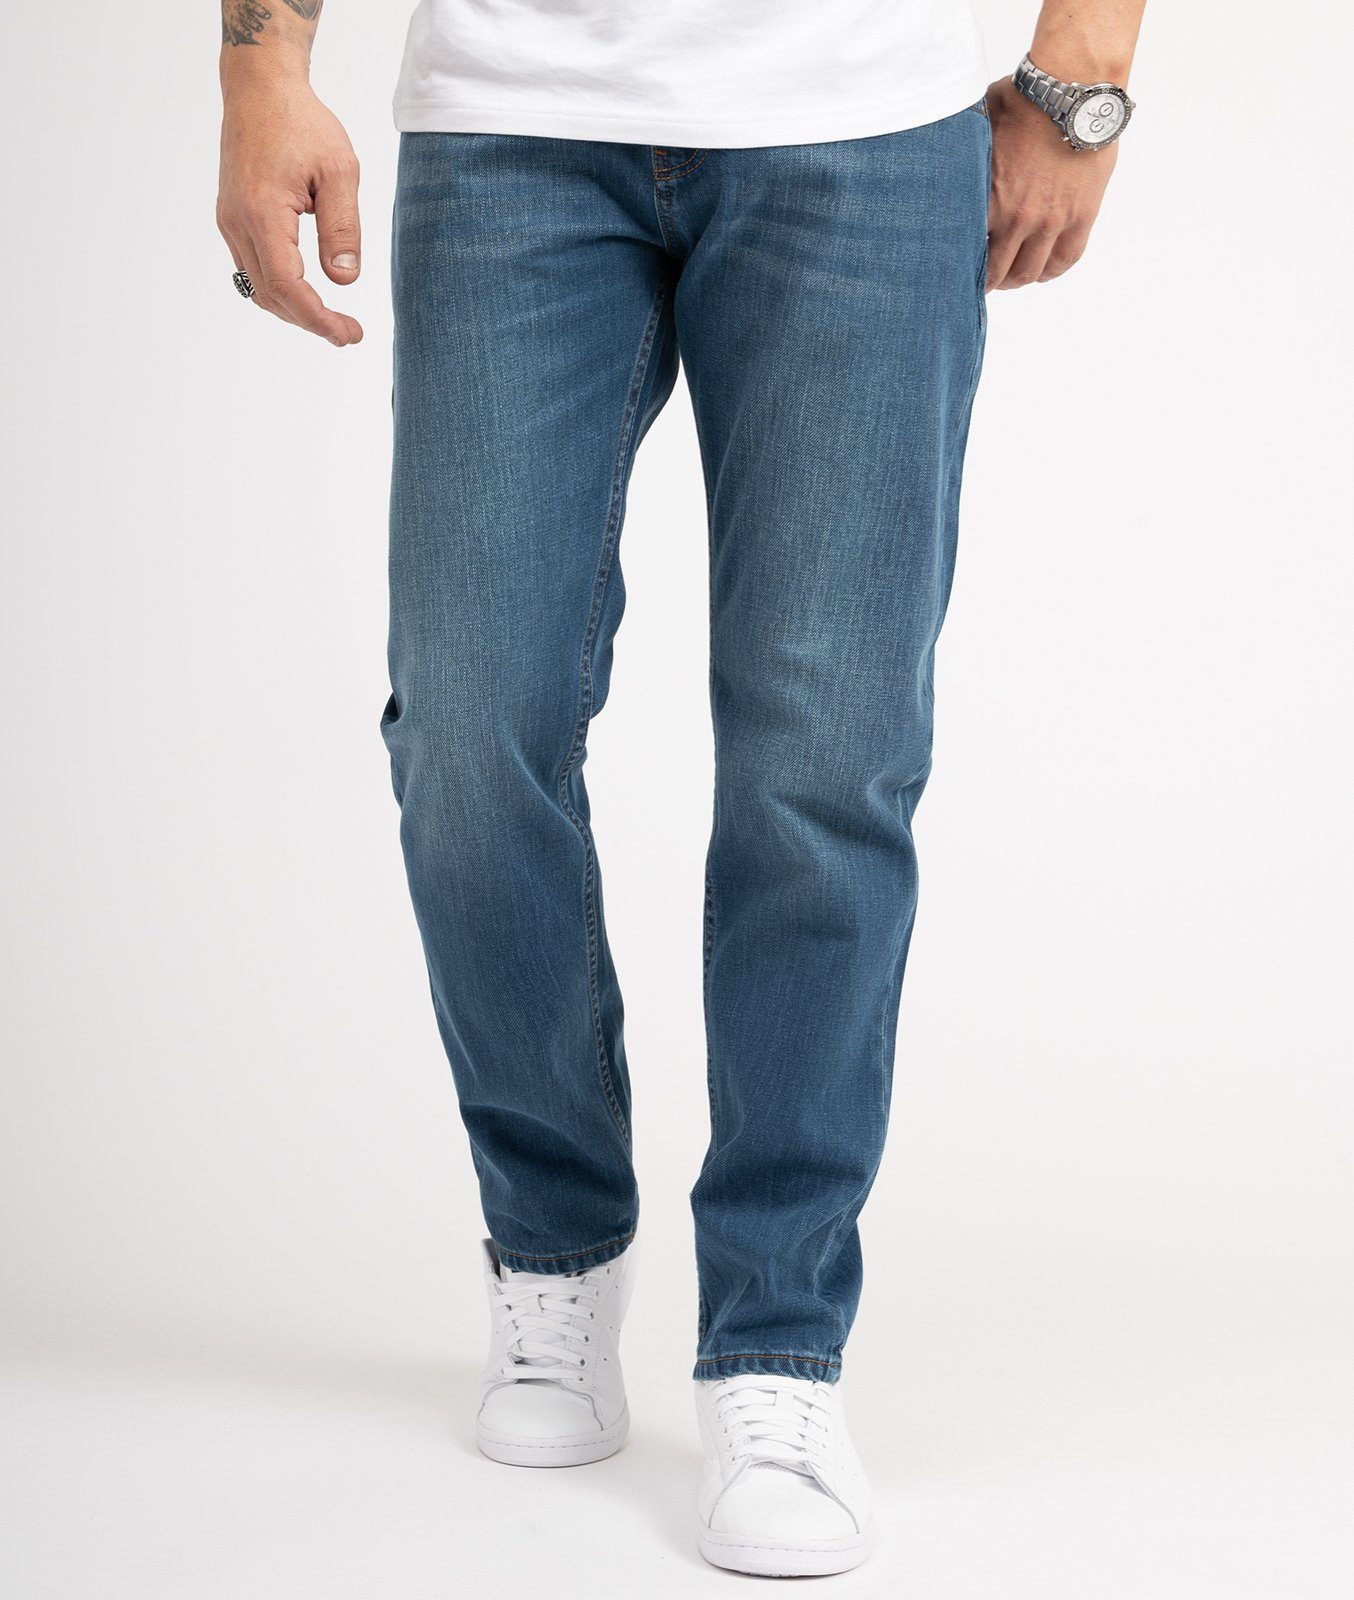 Indumentum Straight-Jeans Herren Comfort Fit Jeans IC-701